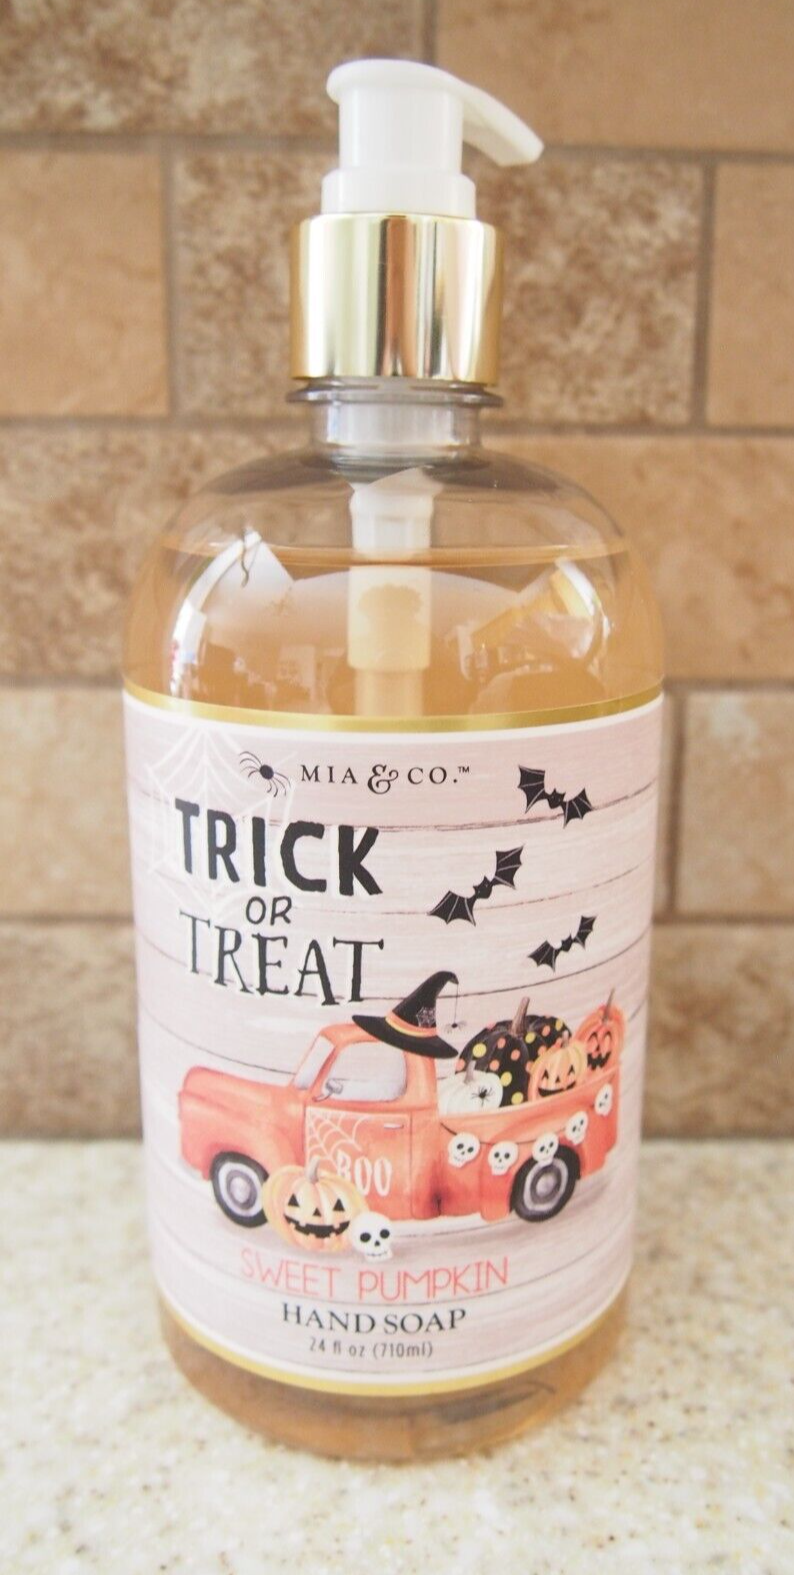 Mia & Co Halloween Orange Truck Trick or Treat Sweet Pumpkin Hand Soap 24oz